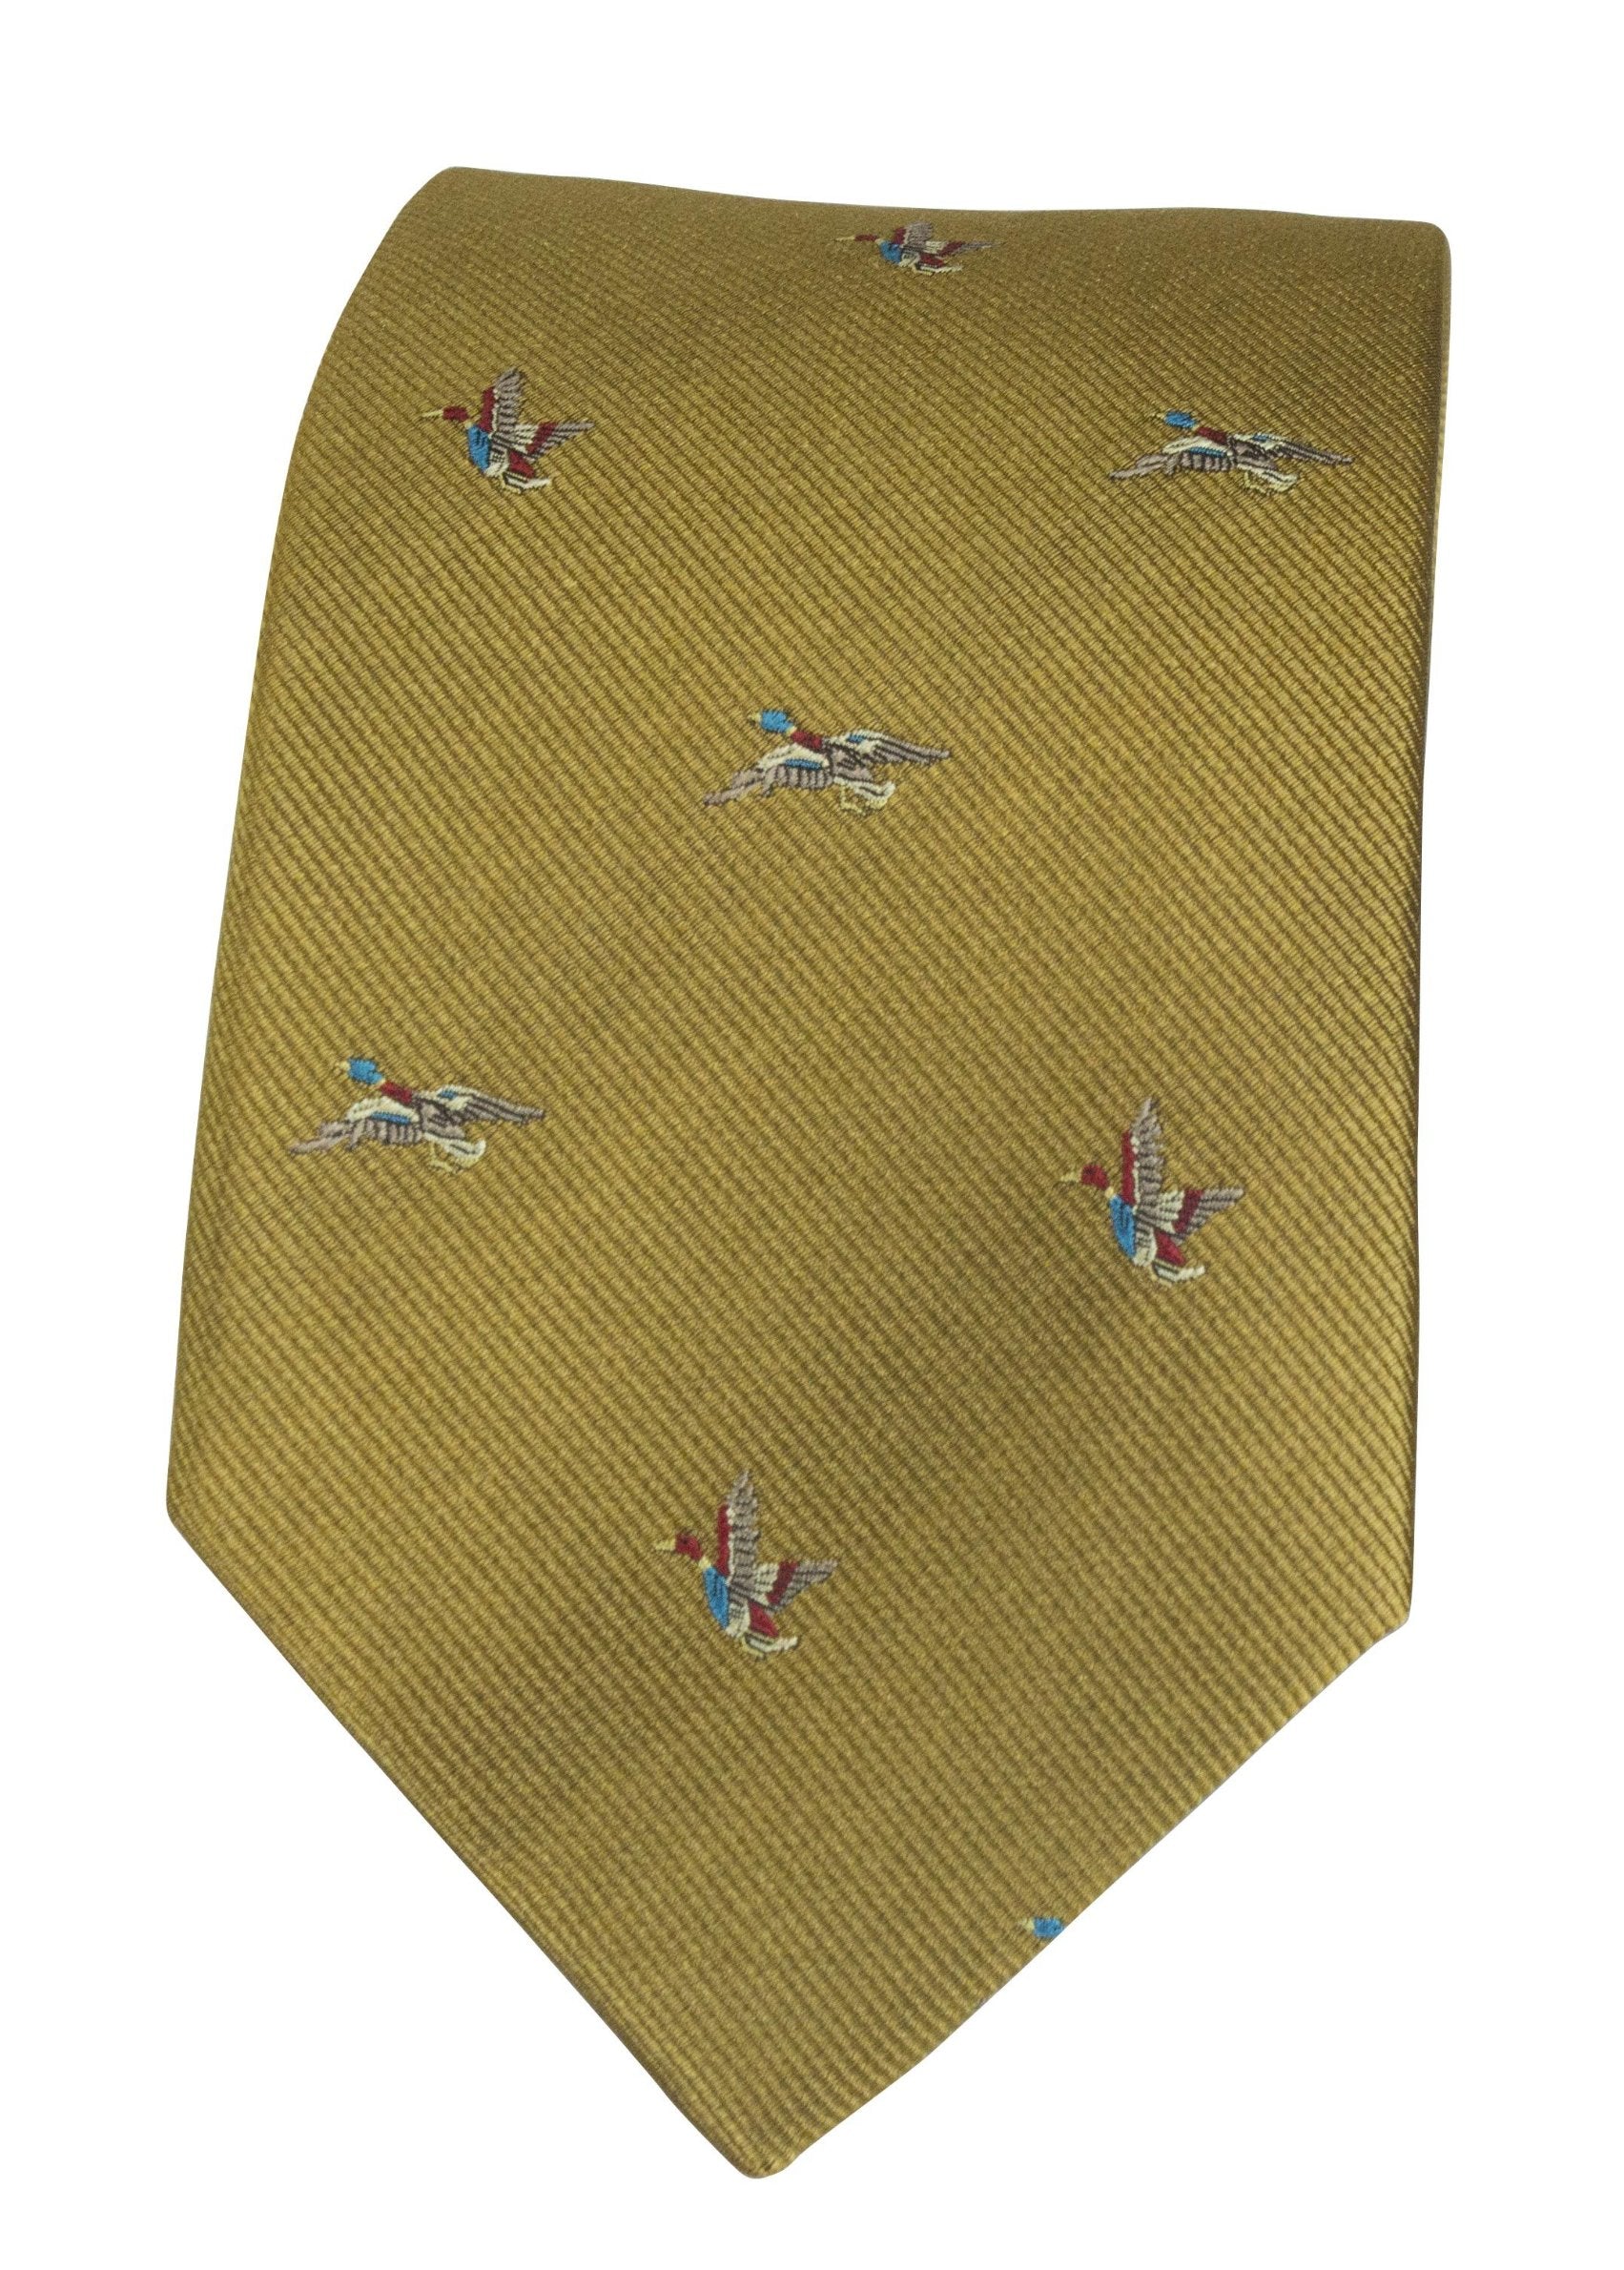 GT8 - 100% Silk Woven Tie - (2 Ducks) - GOLD - Oxford Blue